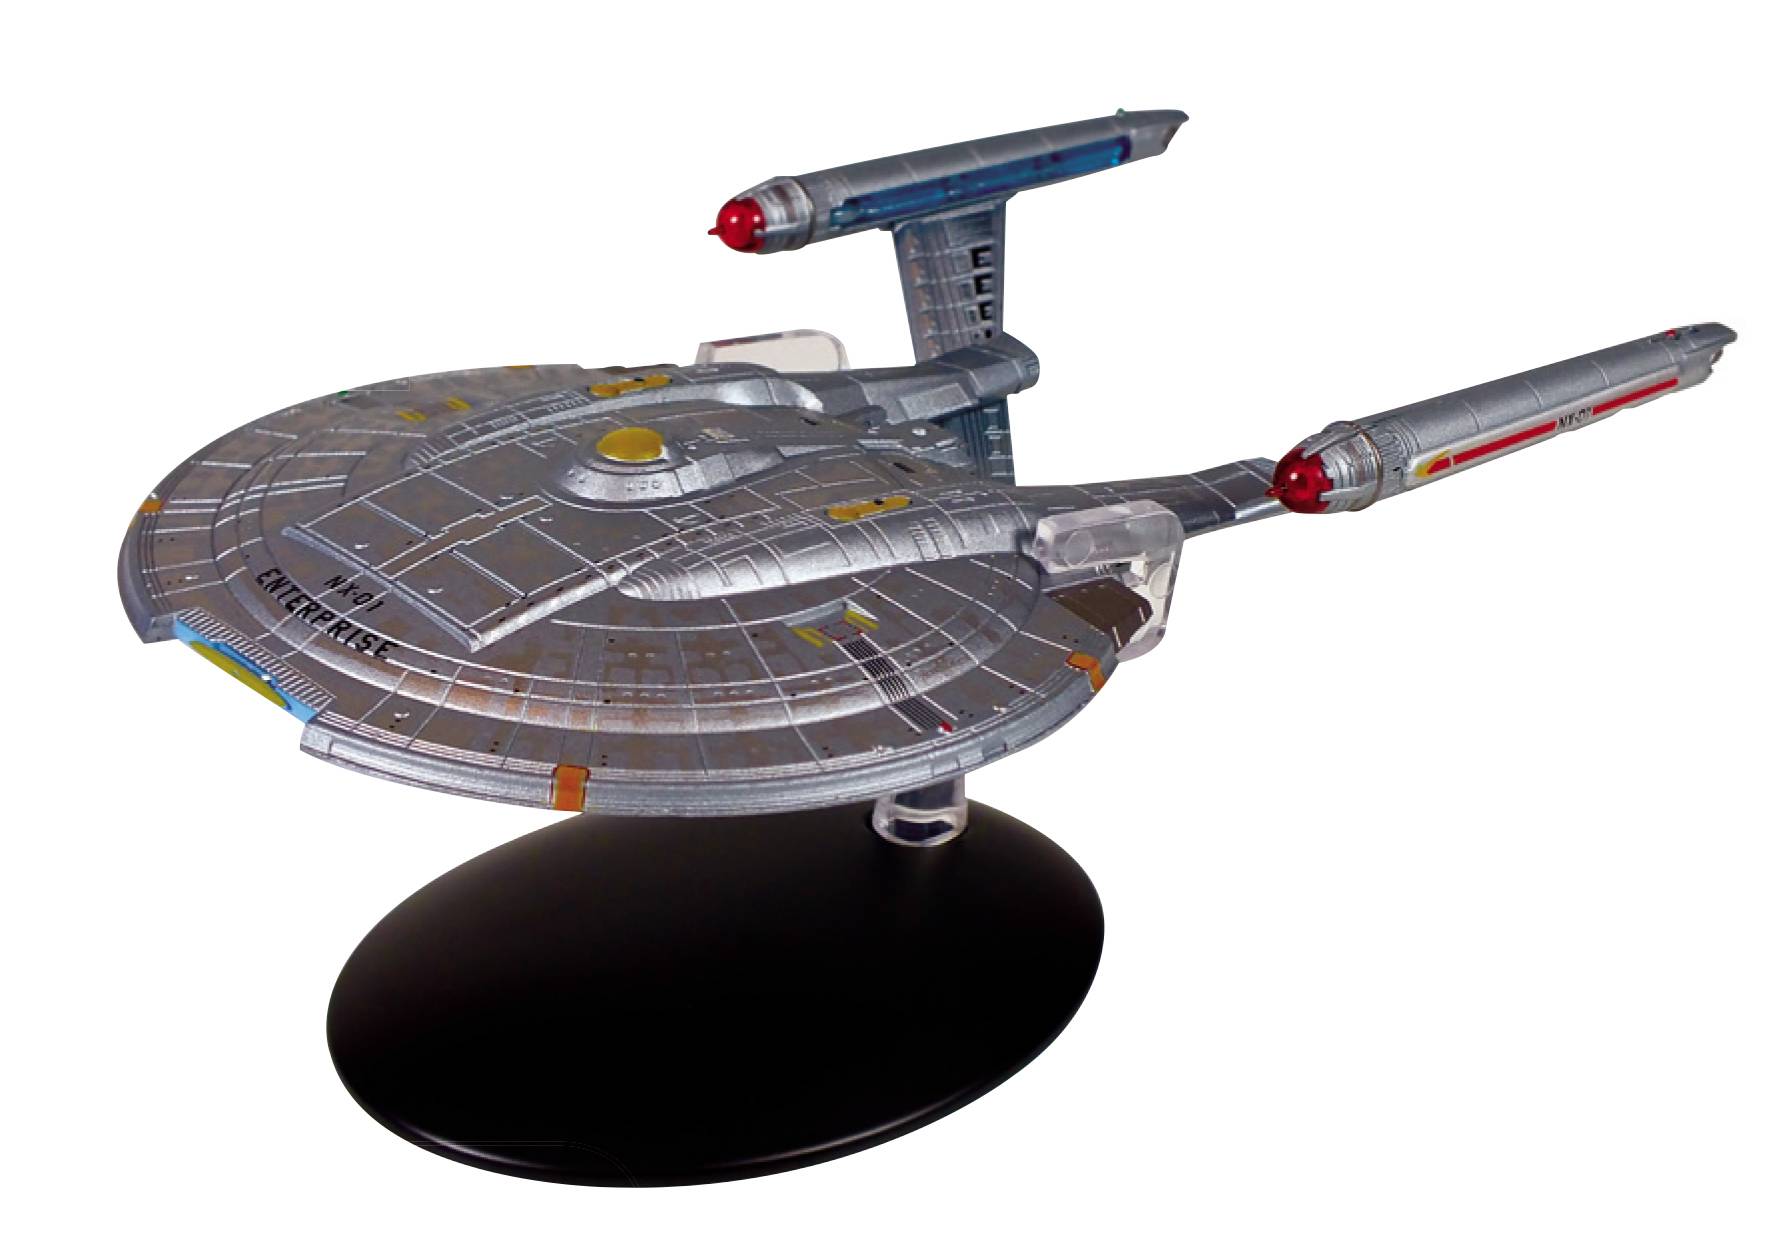 Star Trek Eaglemoss Issue 84 NX-Alpha model with Magazine